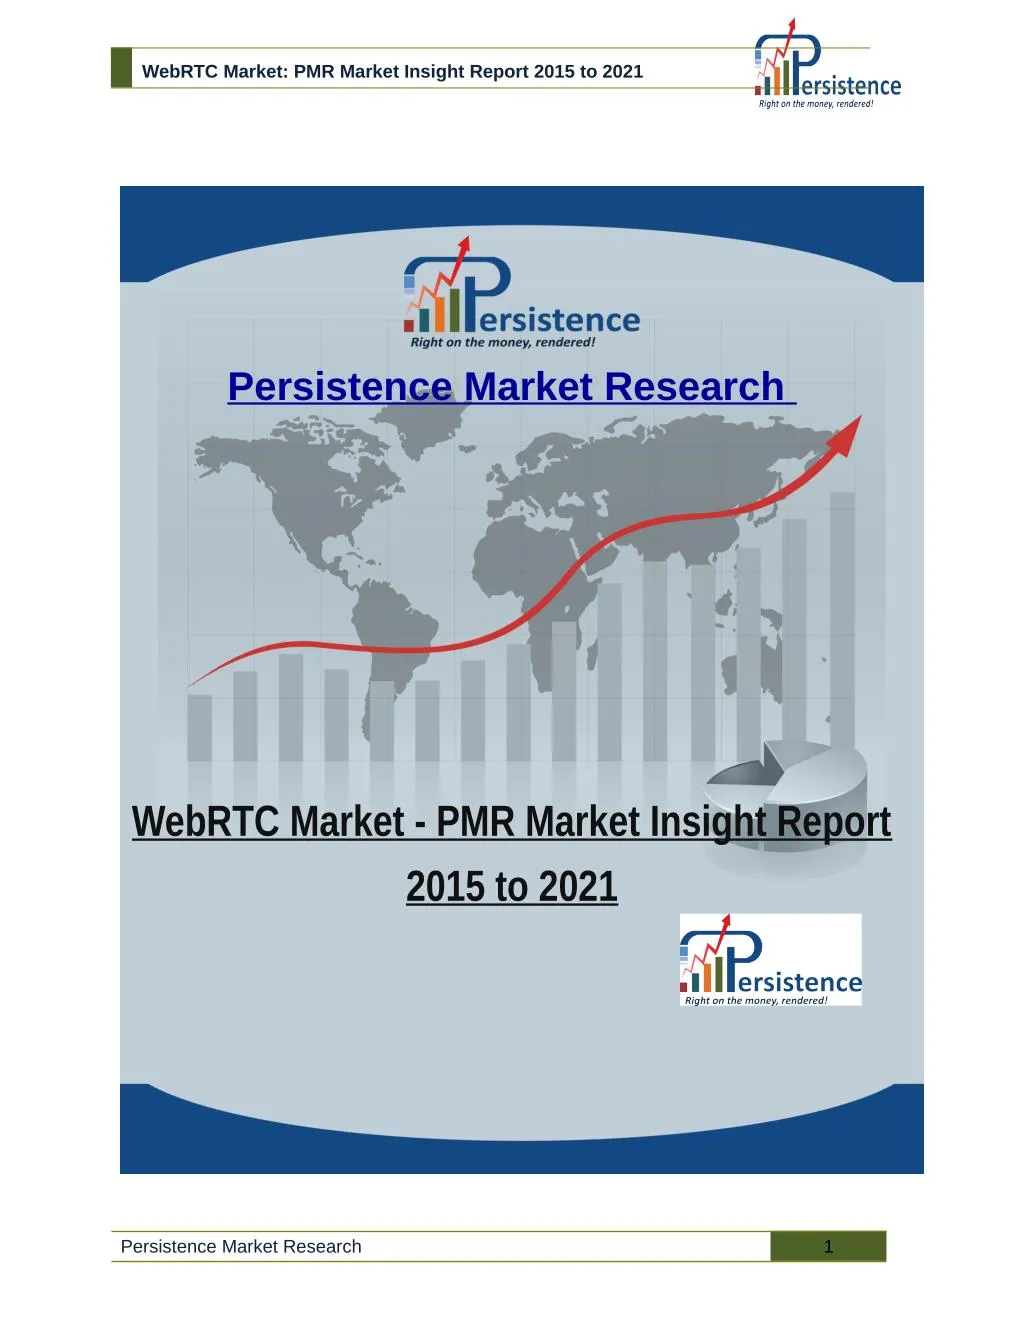 PPT - WebRTC Market: PMR Market Insight Report 2015 to 2021 PowerPoint ...